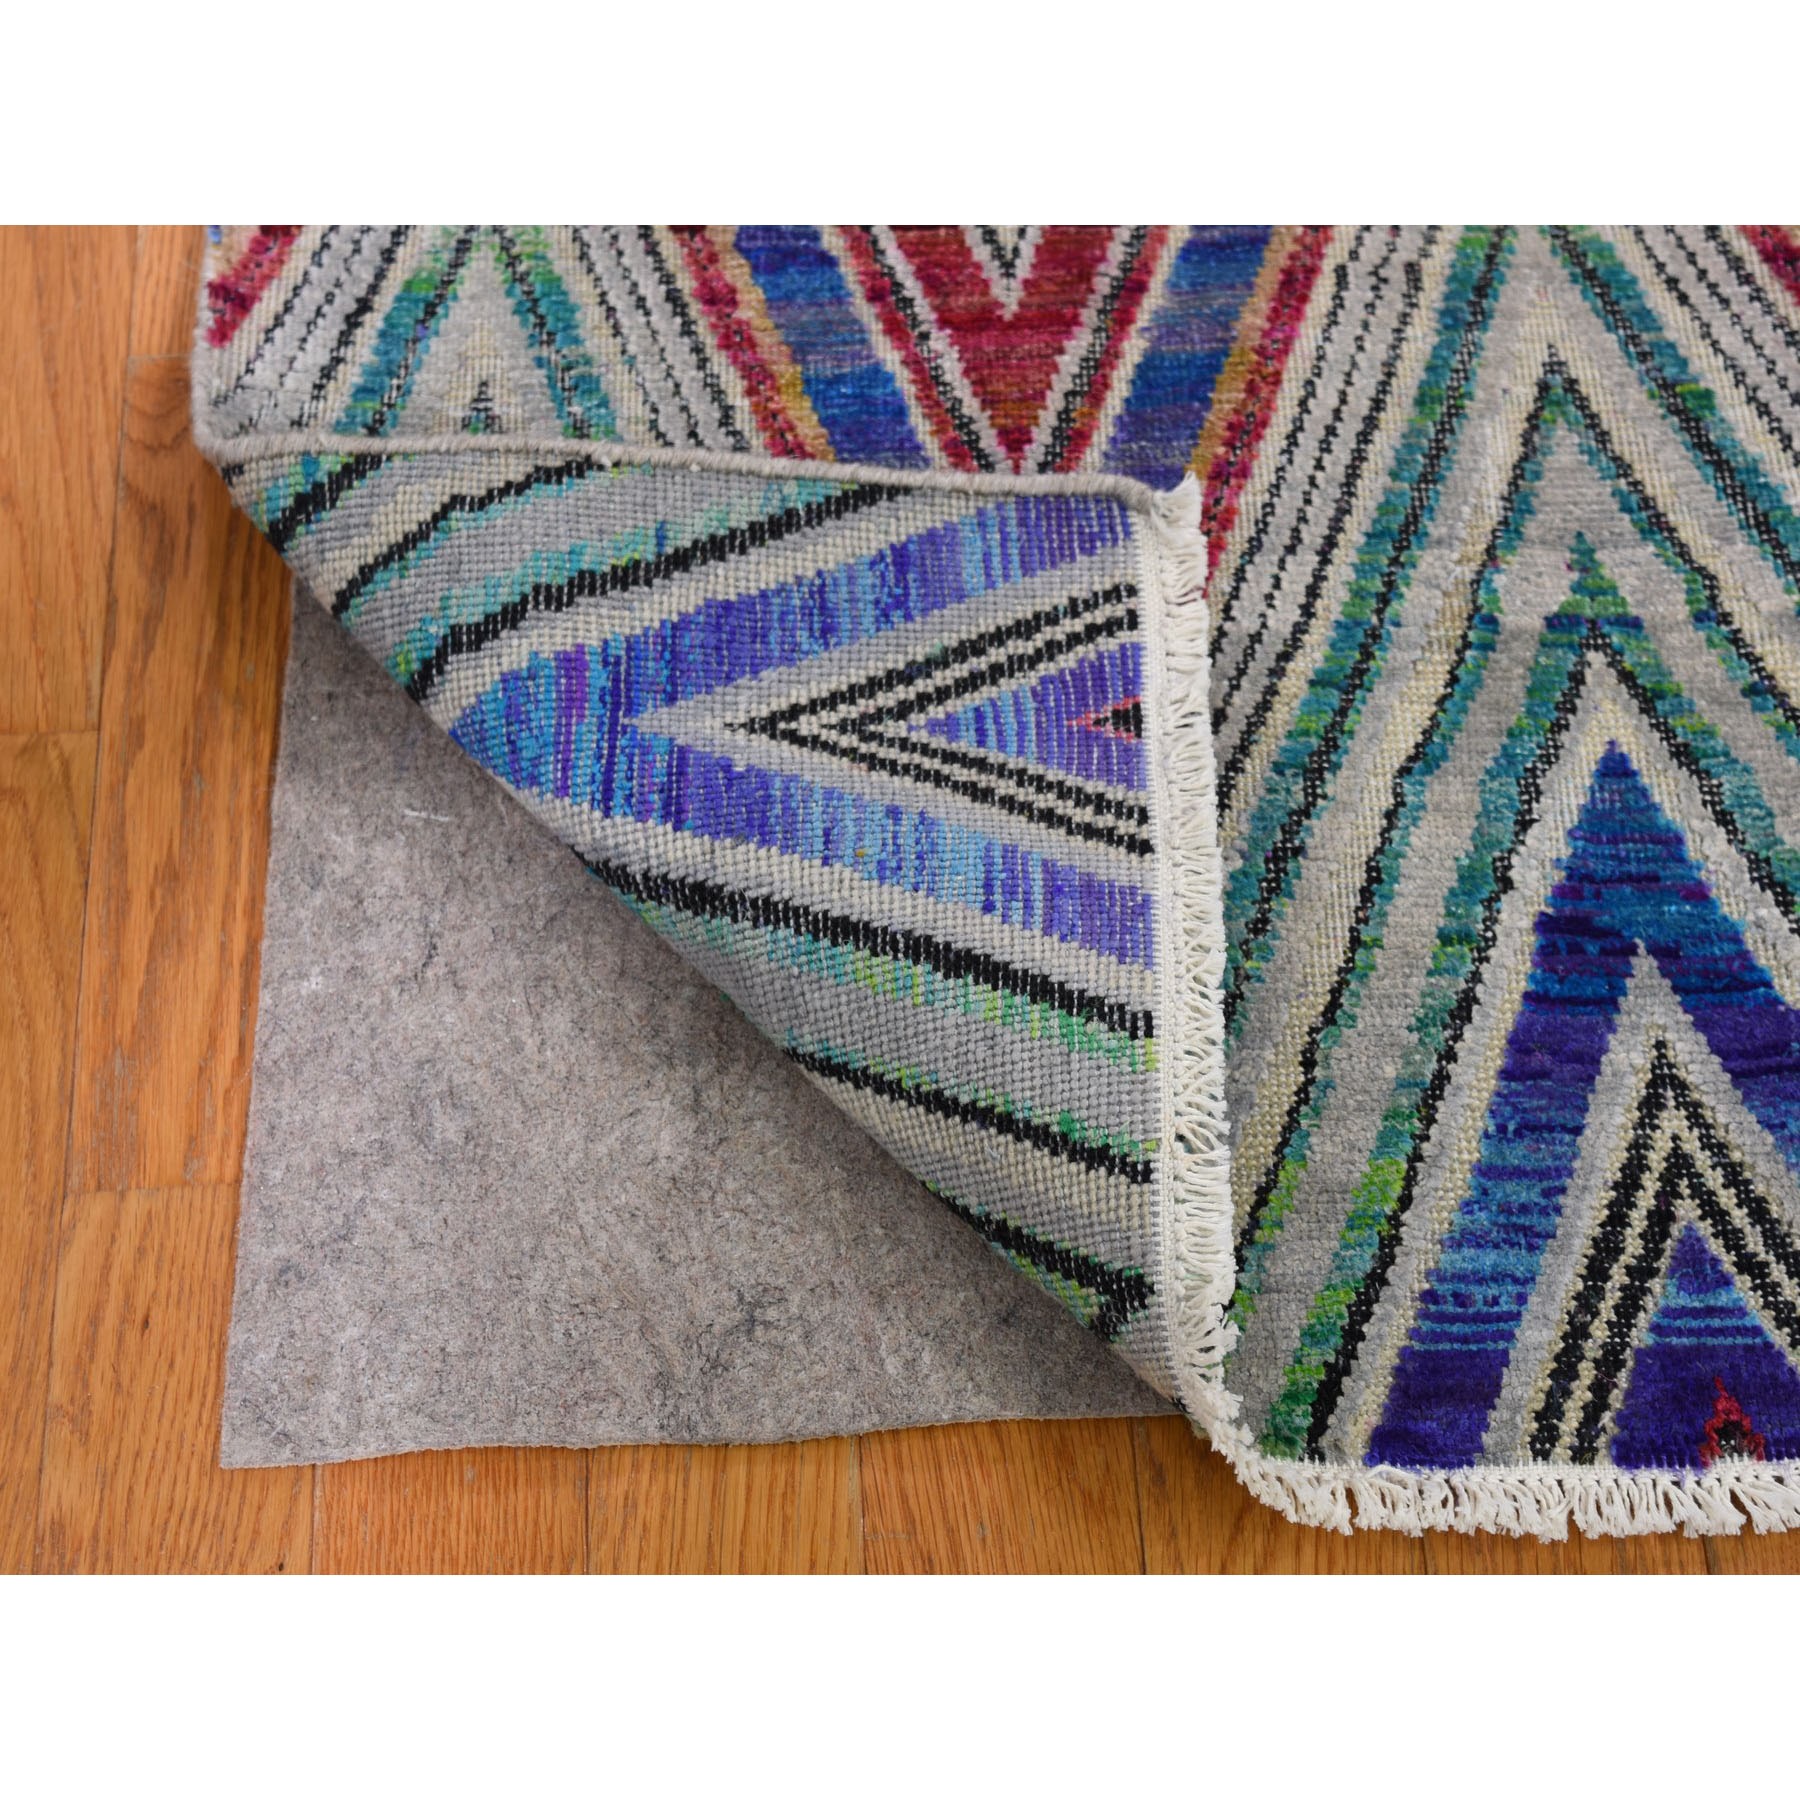 2'x3'3" Hand Woven Chevron Design Sari Silk with Textured Wool Oriental Rug 